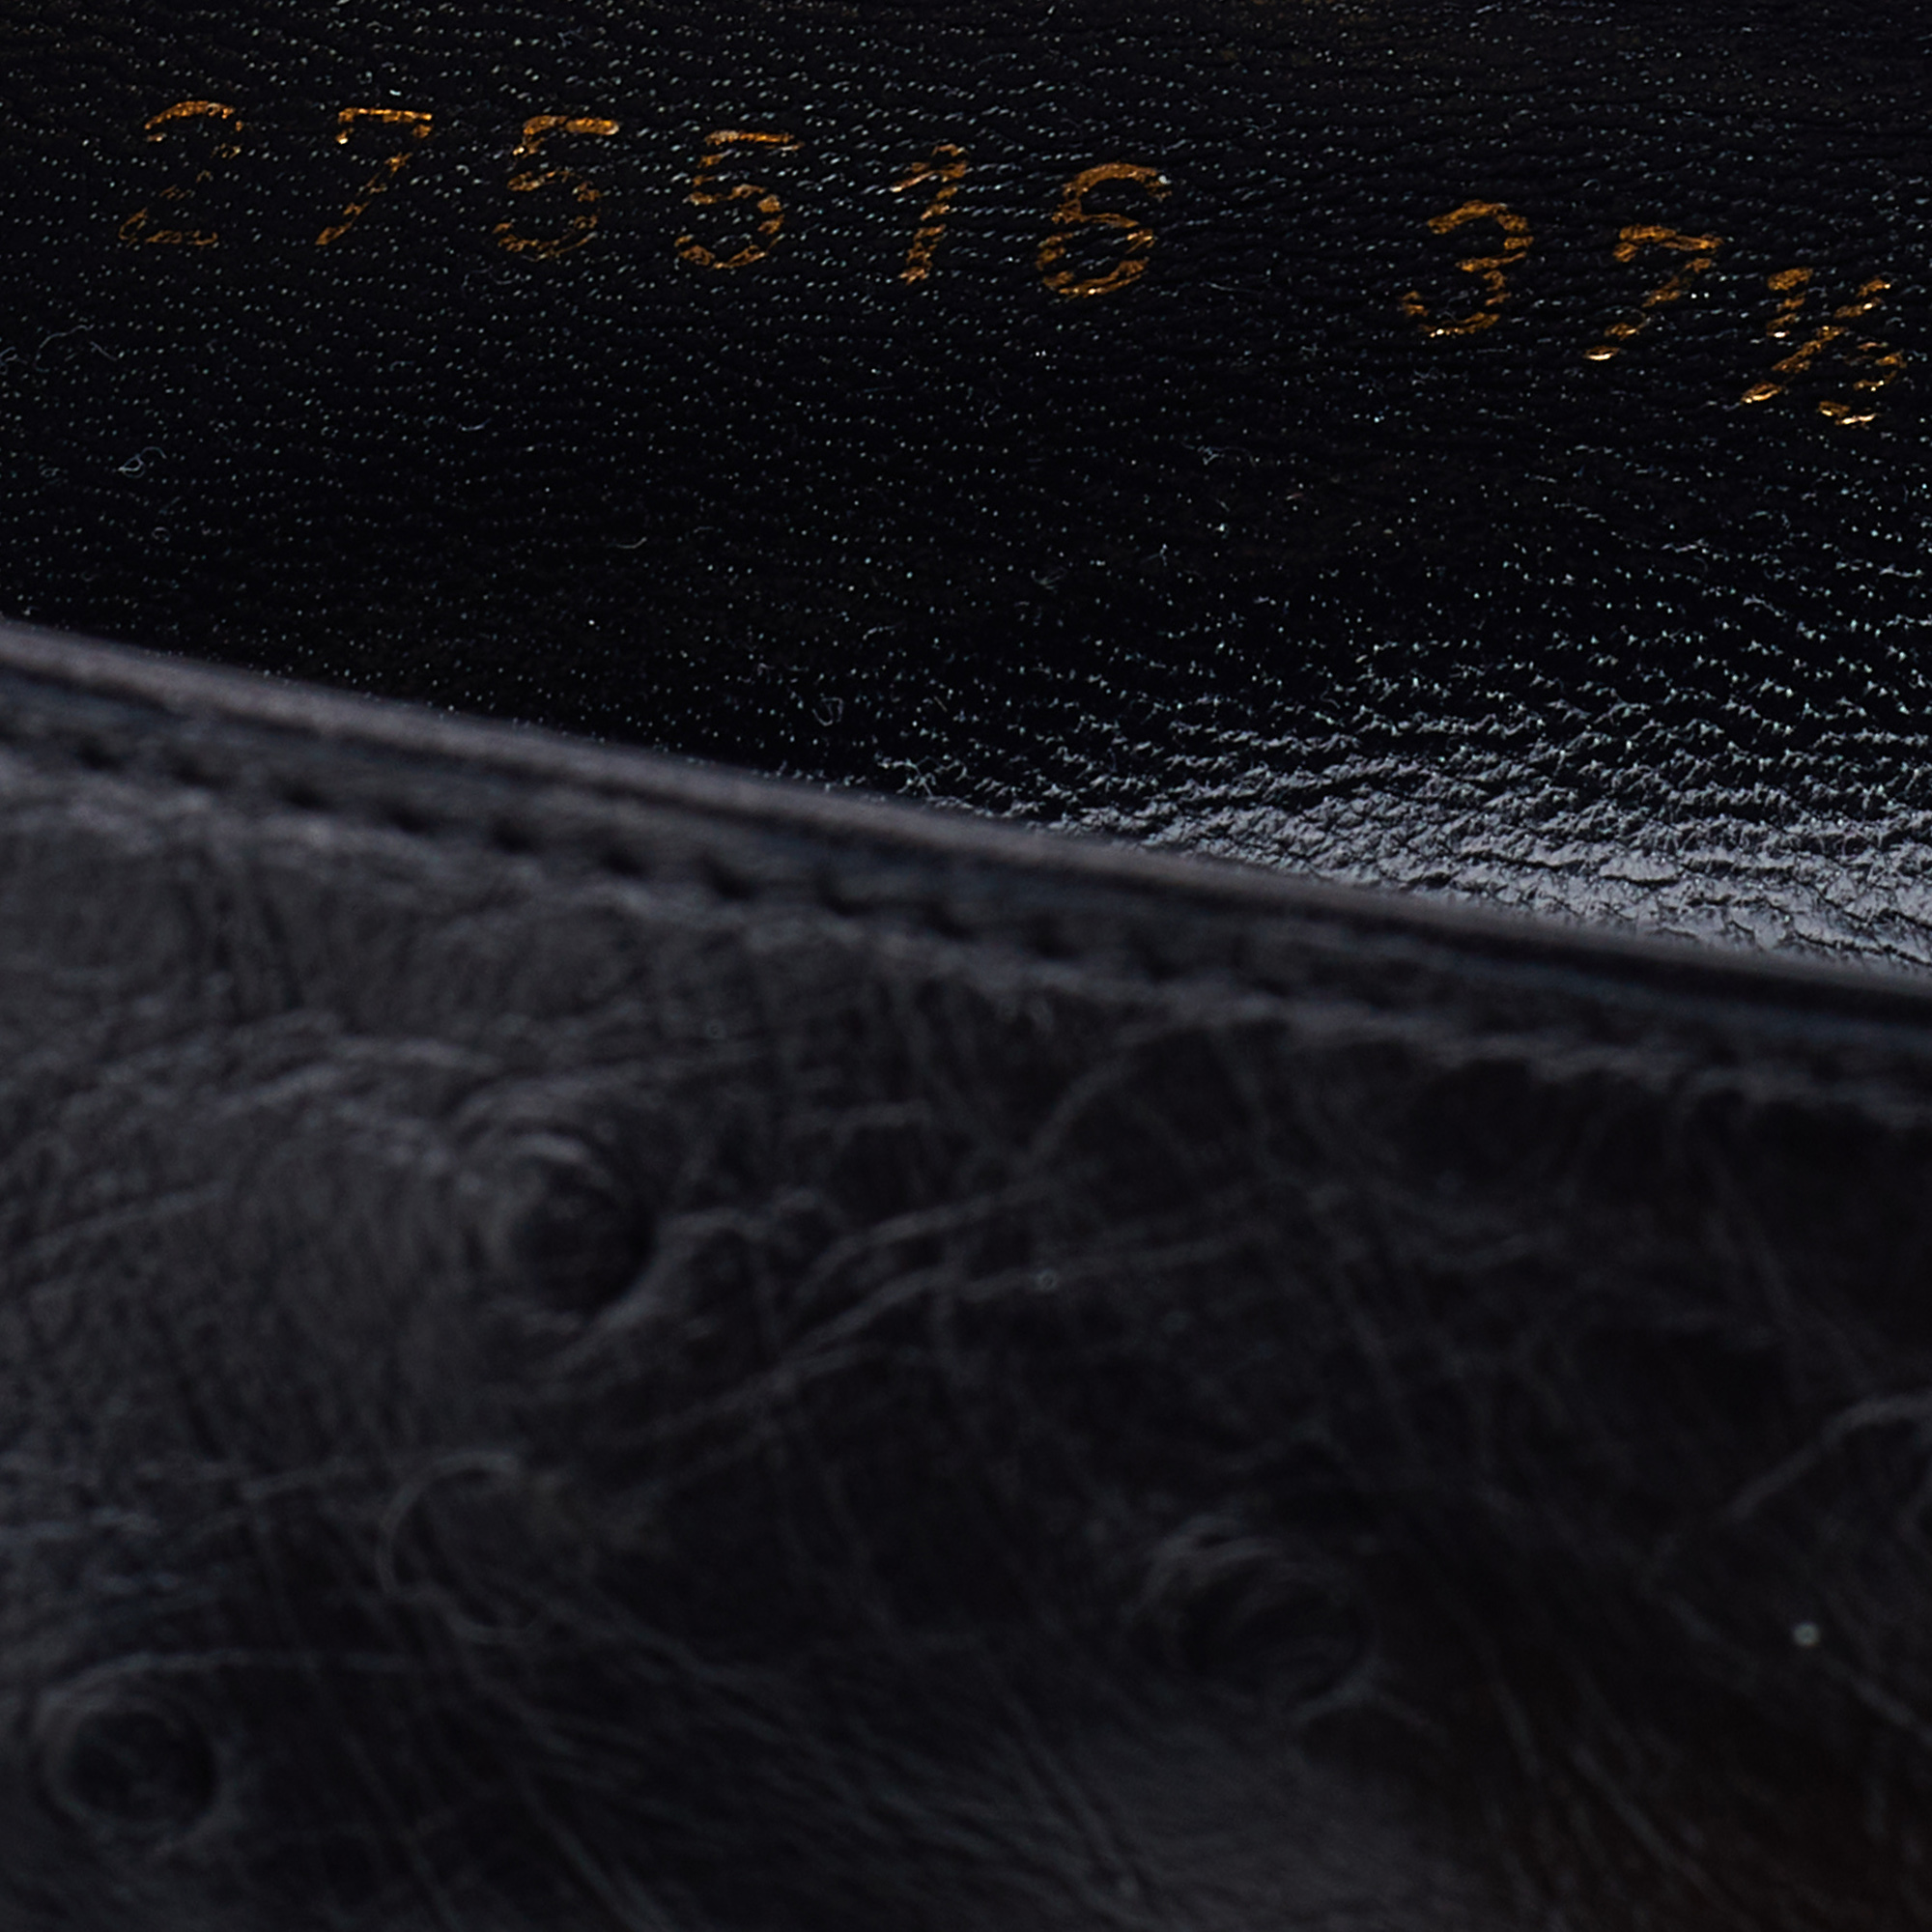 Yves Saint Laurent Black Ostrich Leather Tribtoo Platform Pumps Size 37.5